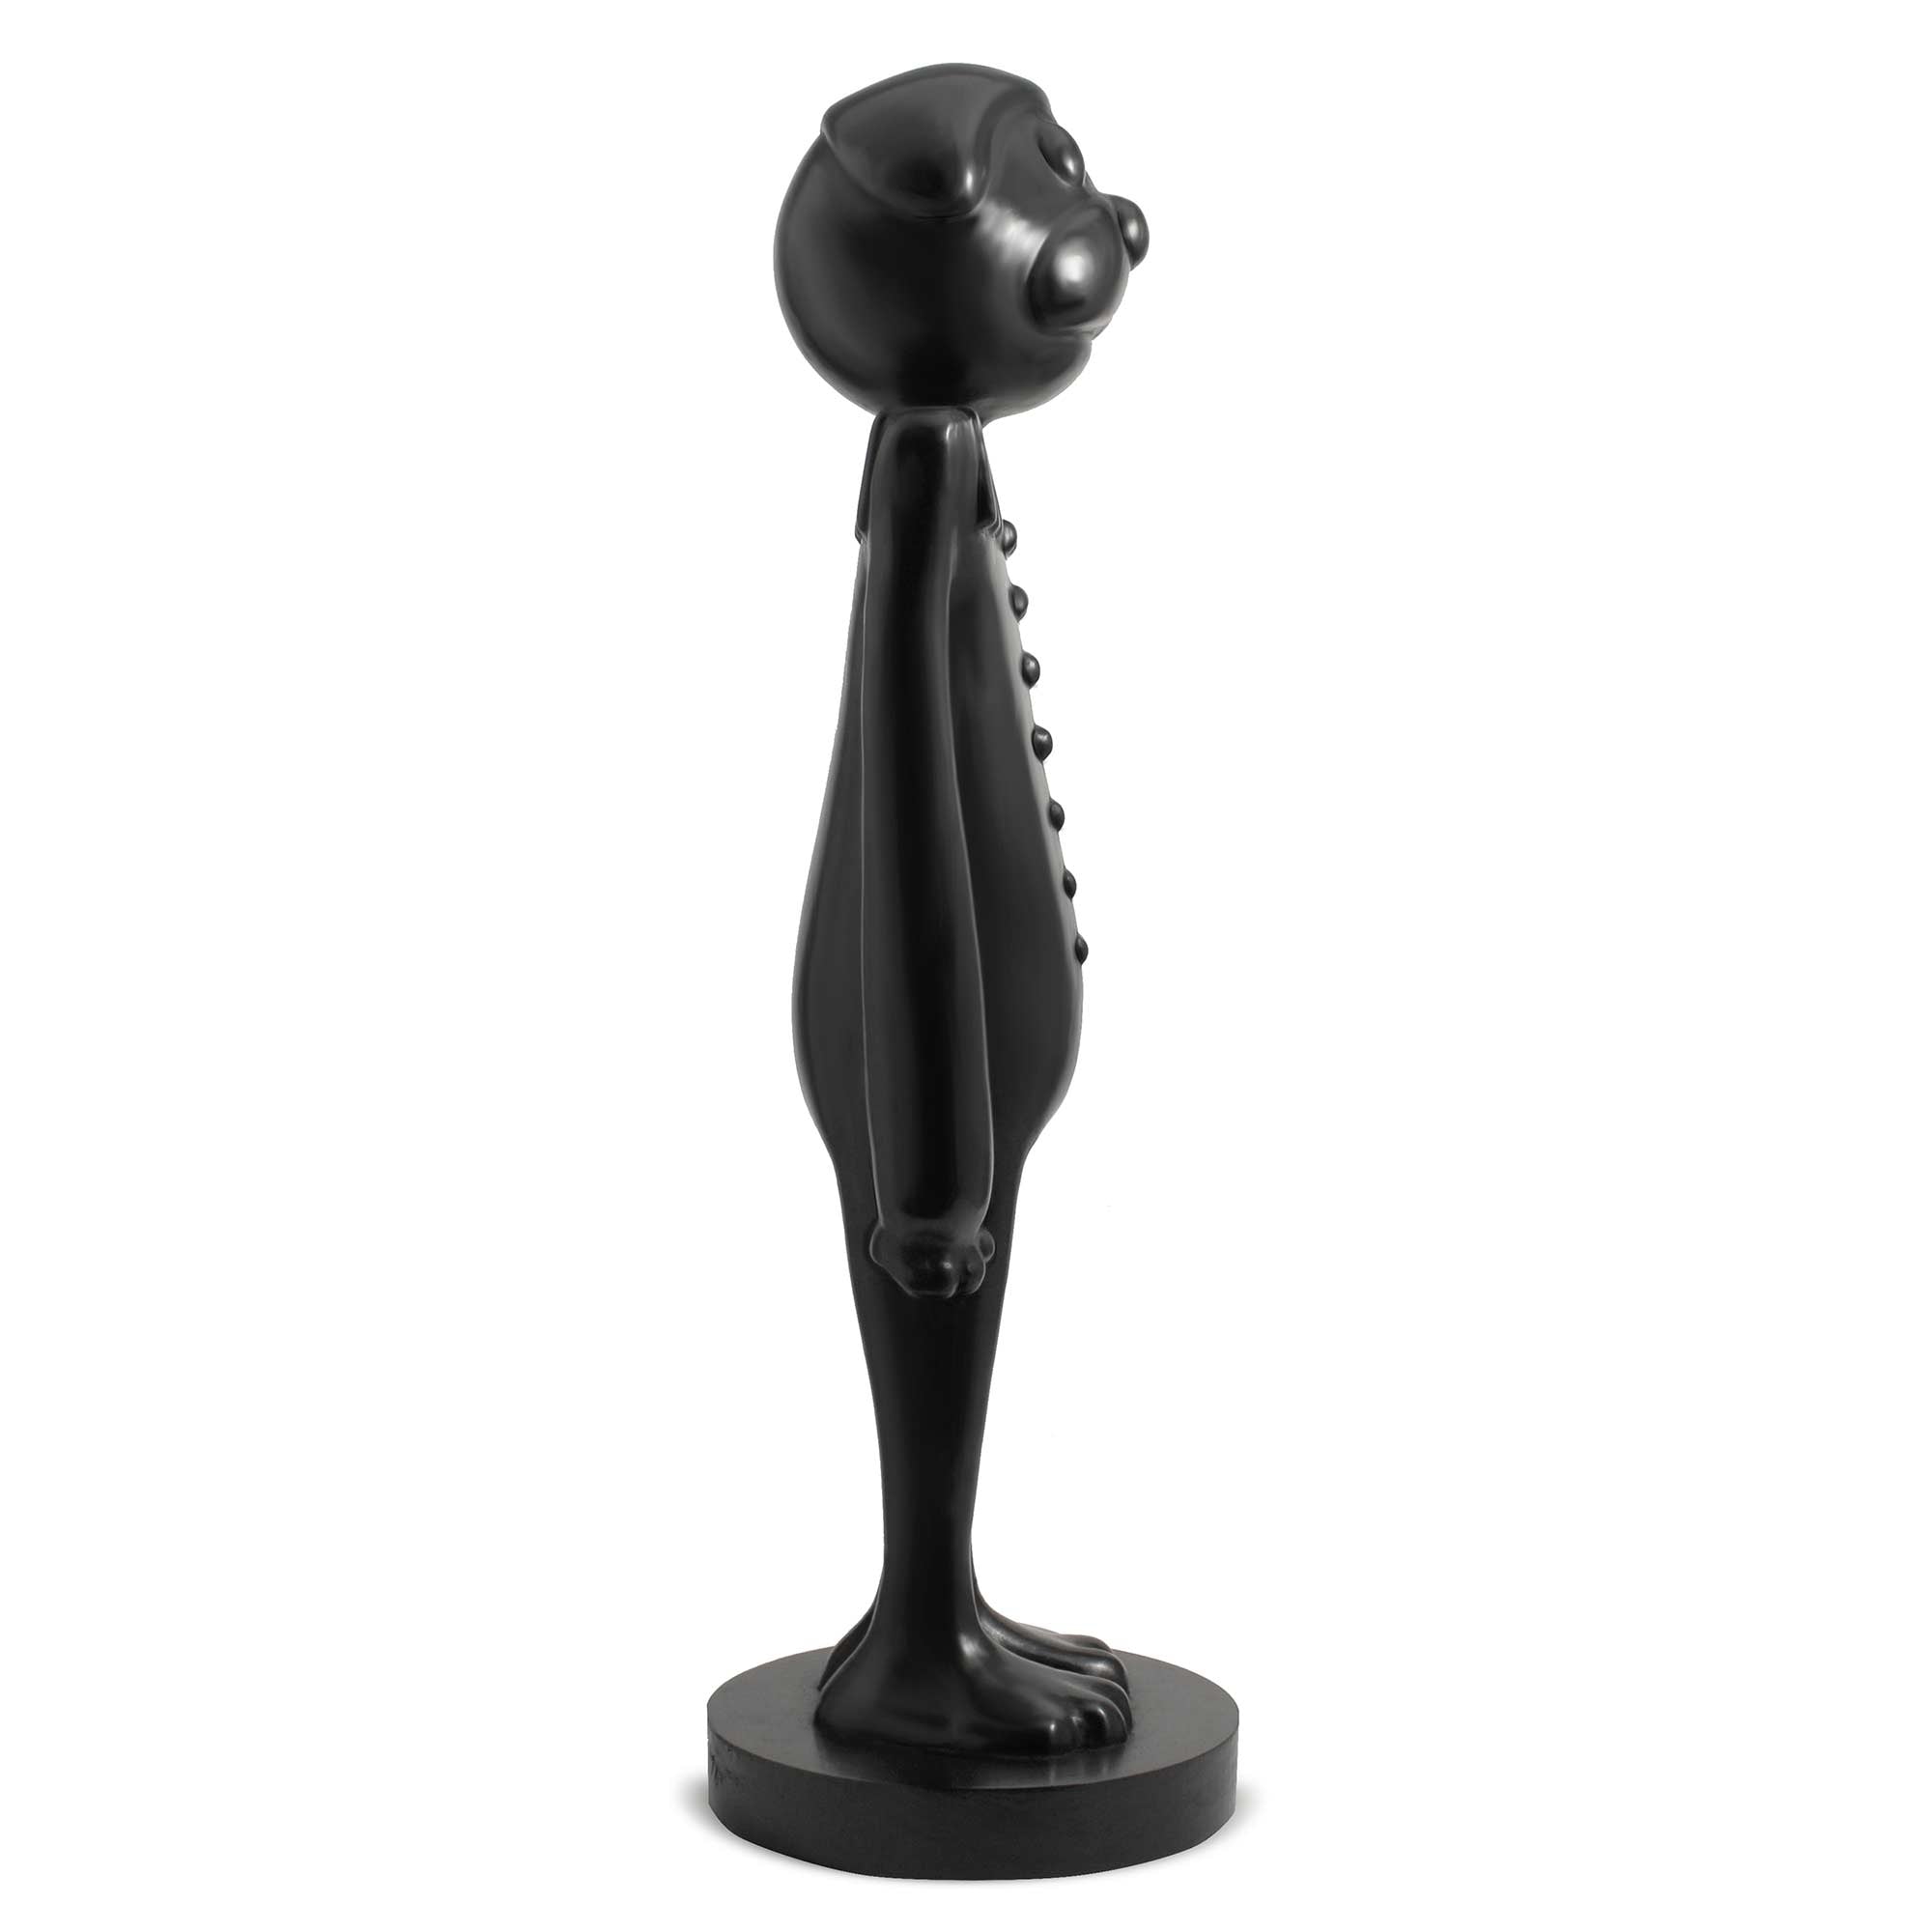 Bonaparte, dog wood sculpture with black polished, by artist Ferdi B Dick, side view